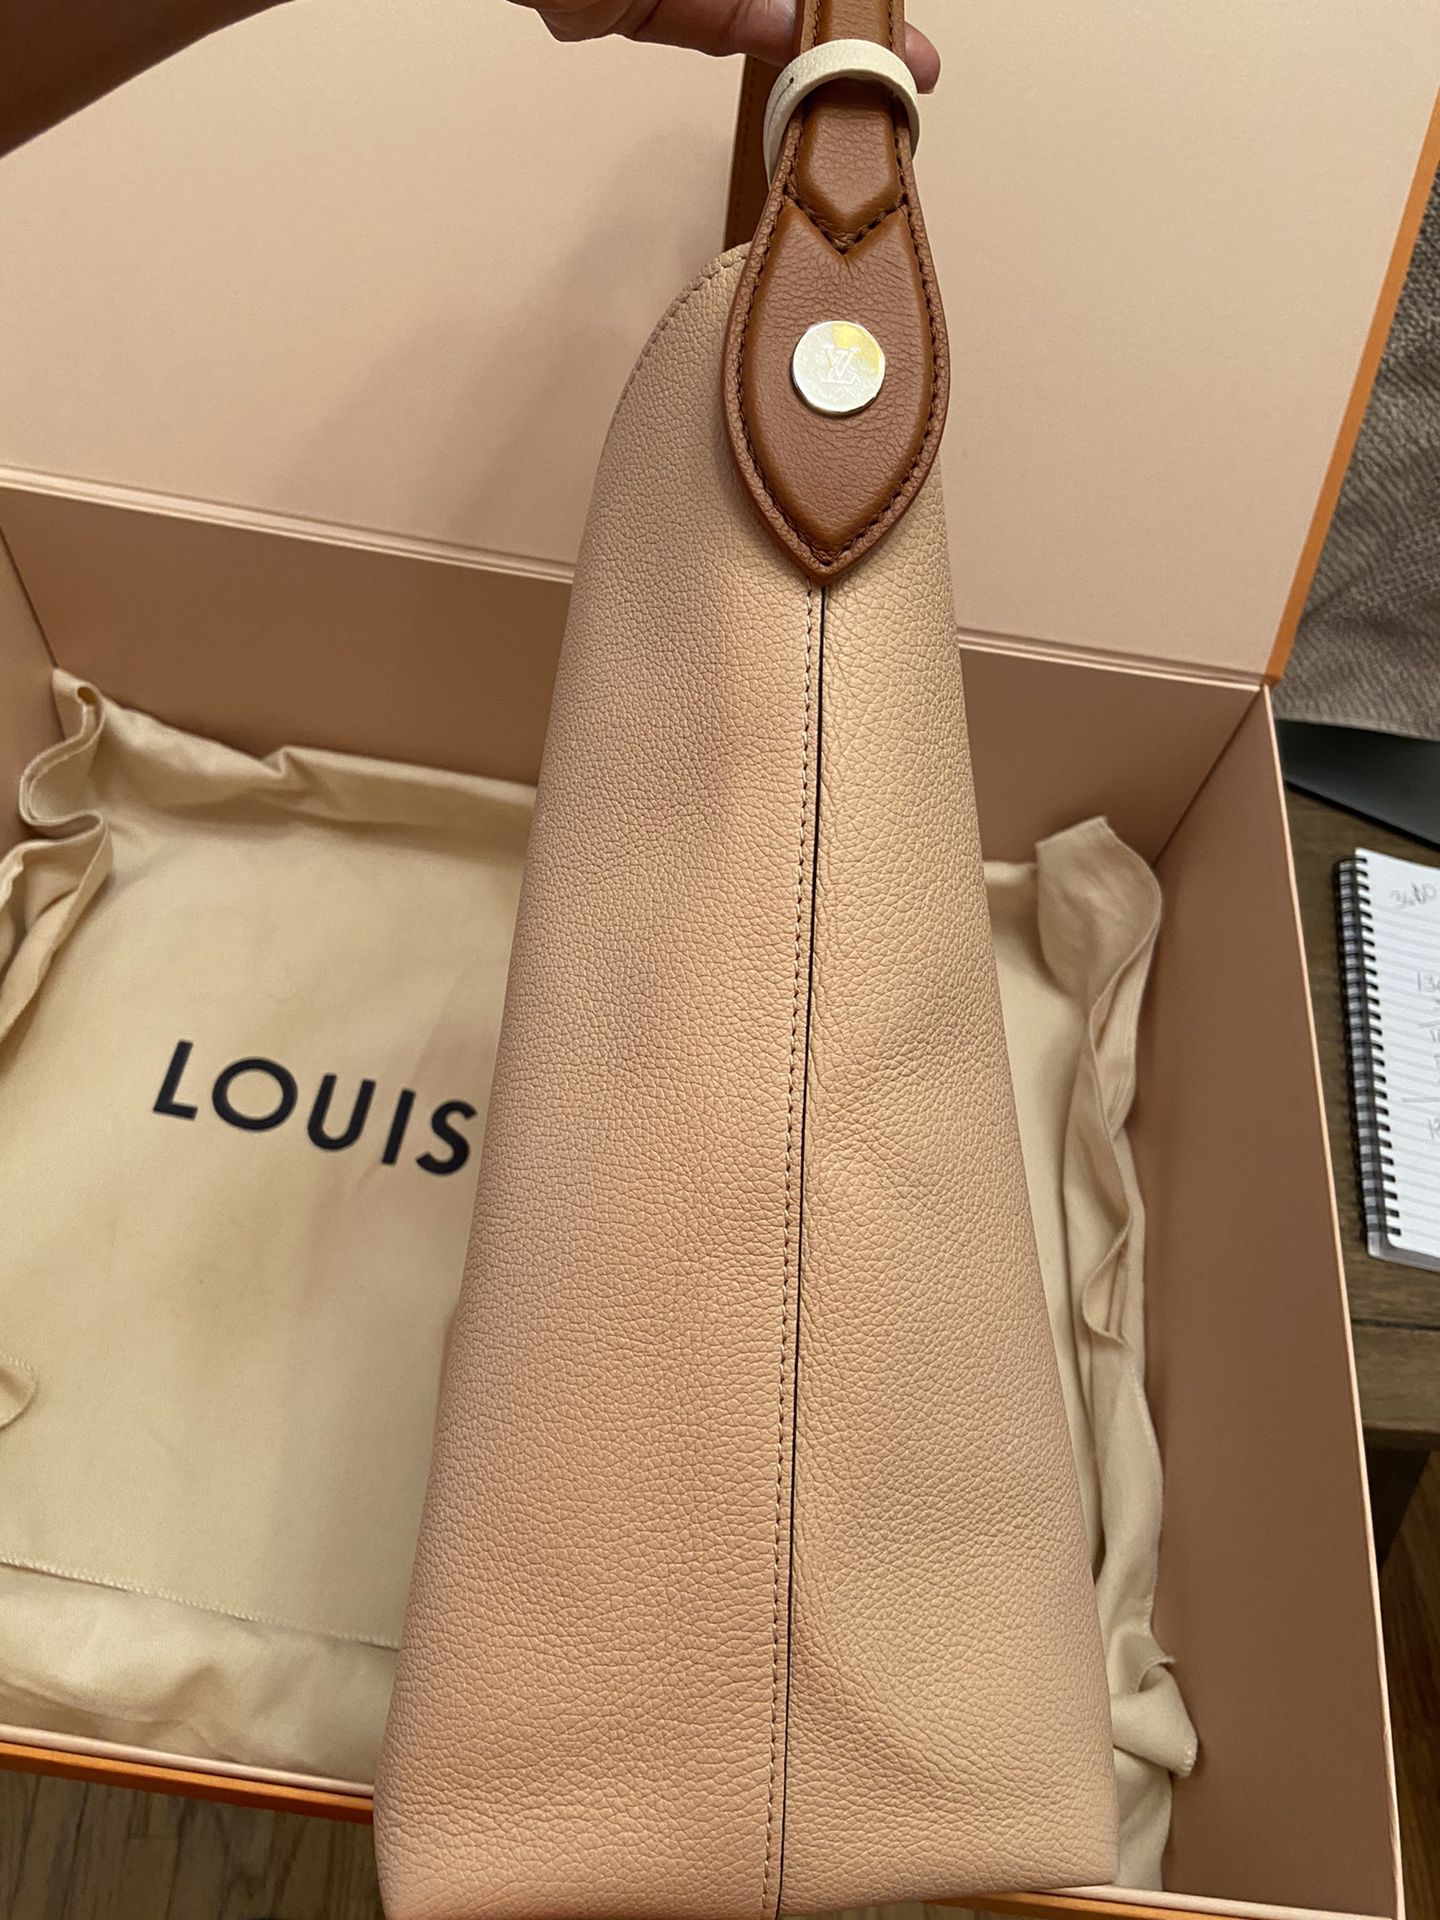 Louie Vuitton Purse Lockme Hobo for Sale in Oswego, IL - OfferUp